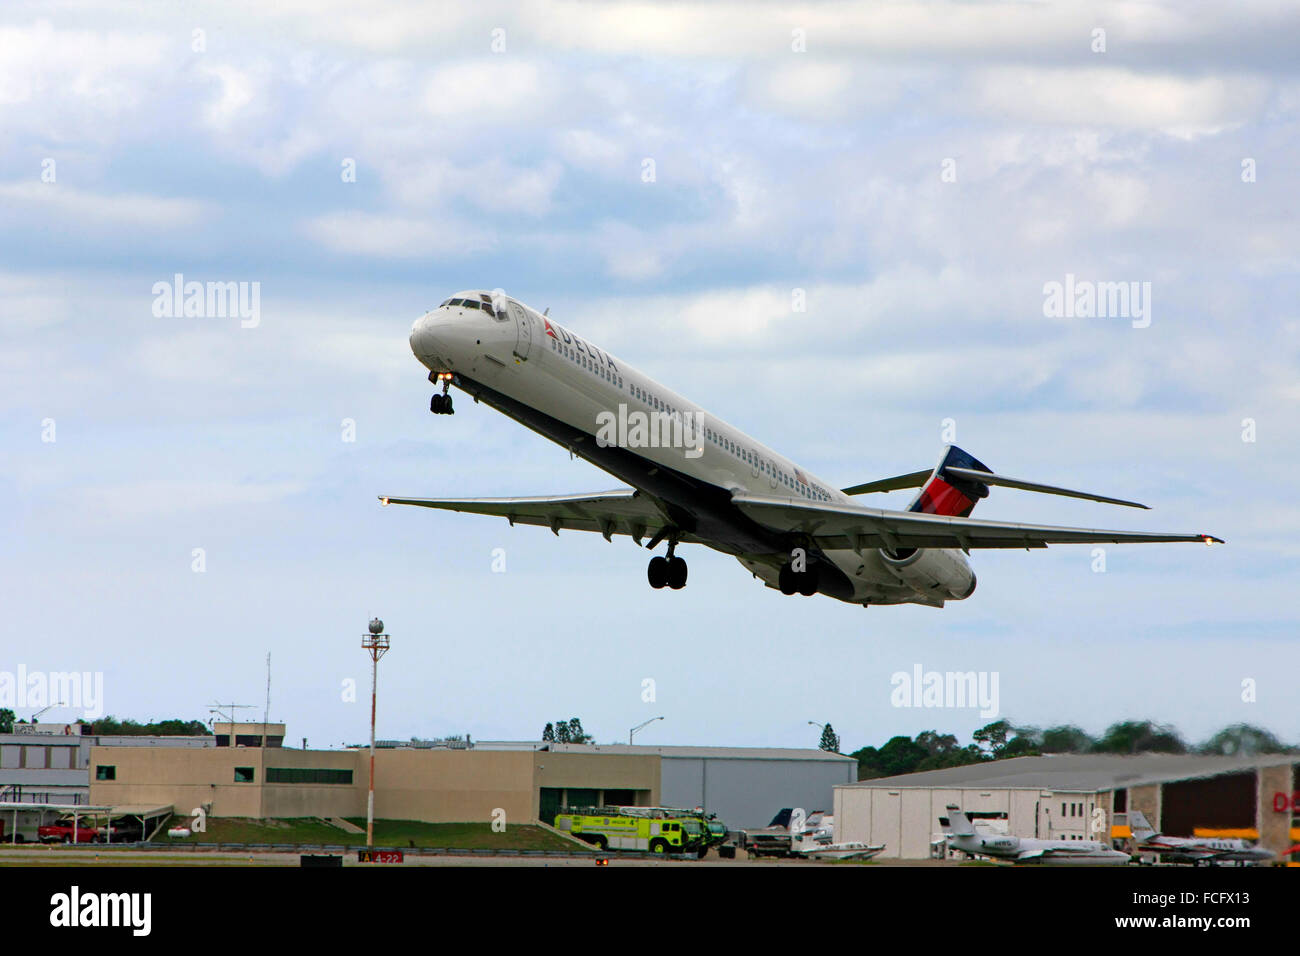 McDonnell Douglas MD-80/90 commercial jet passenger plane of Delta Air Lines leaves Sarasota airport bound for ATL Atlanta Stock Photo